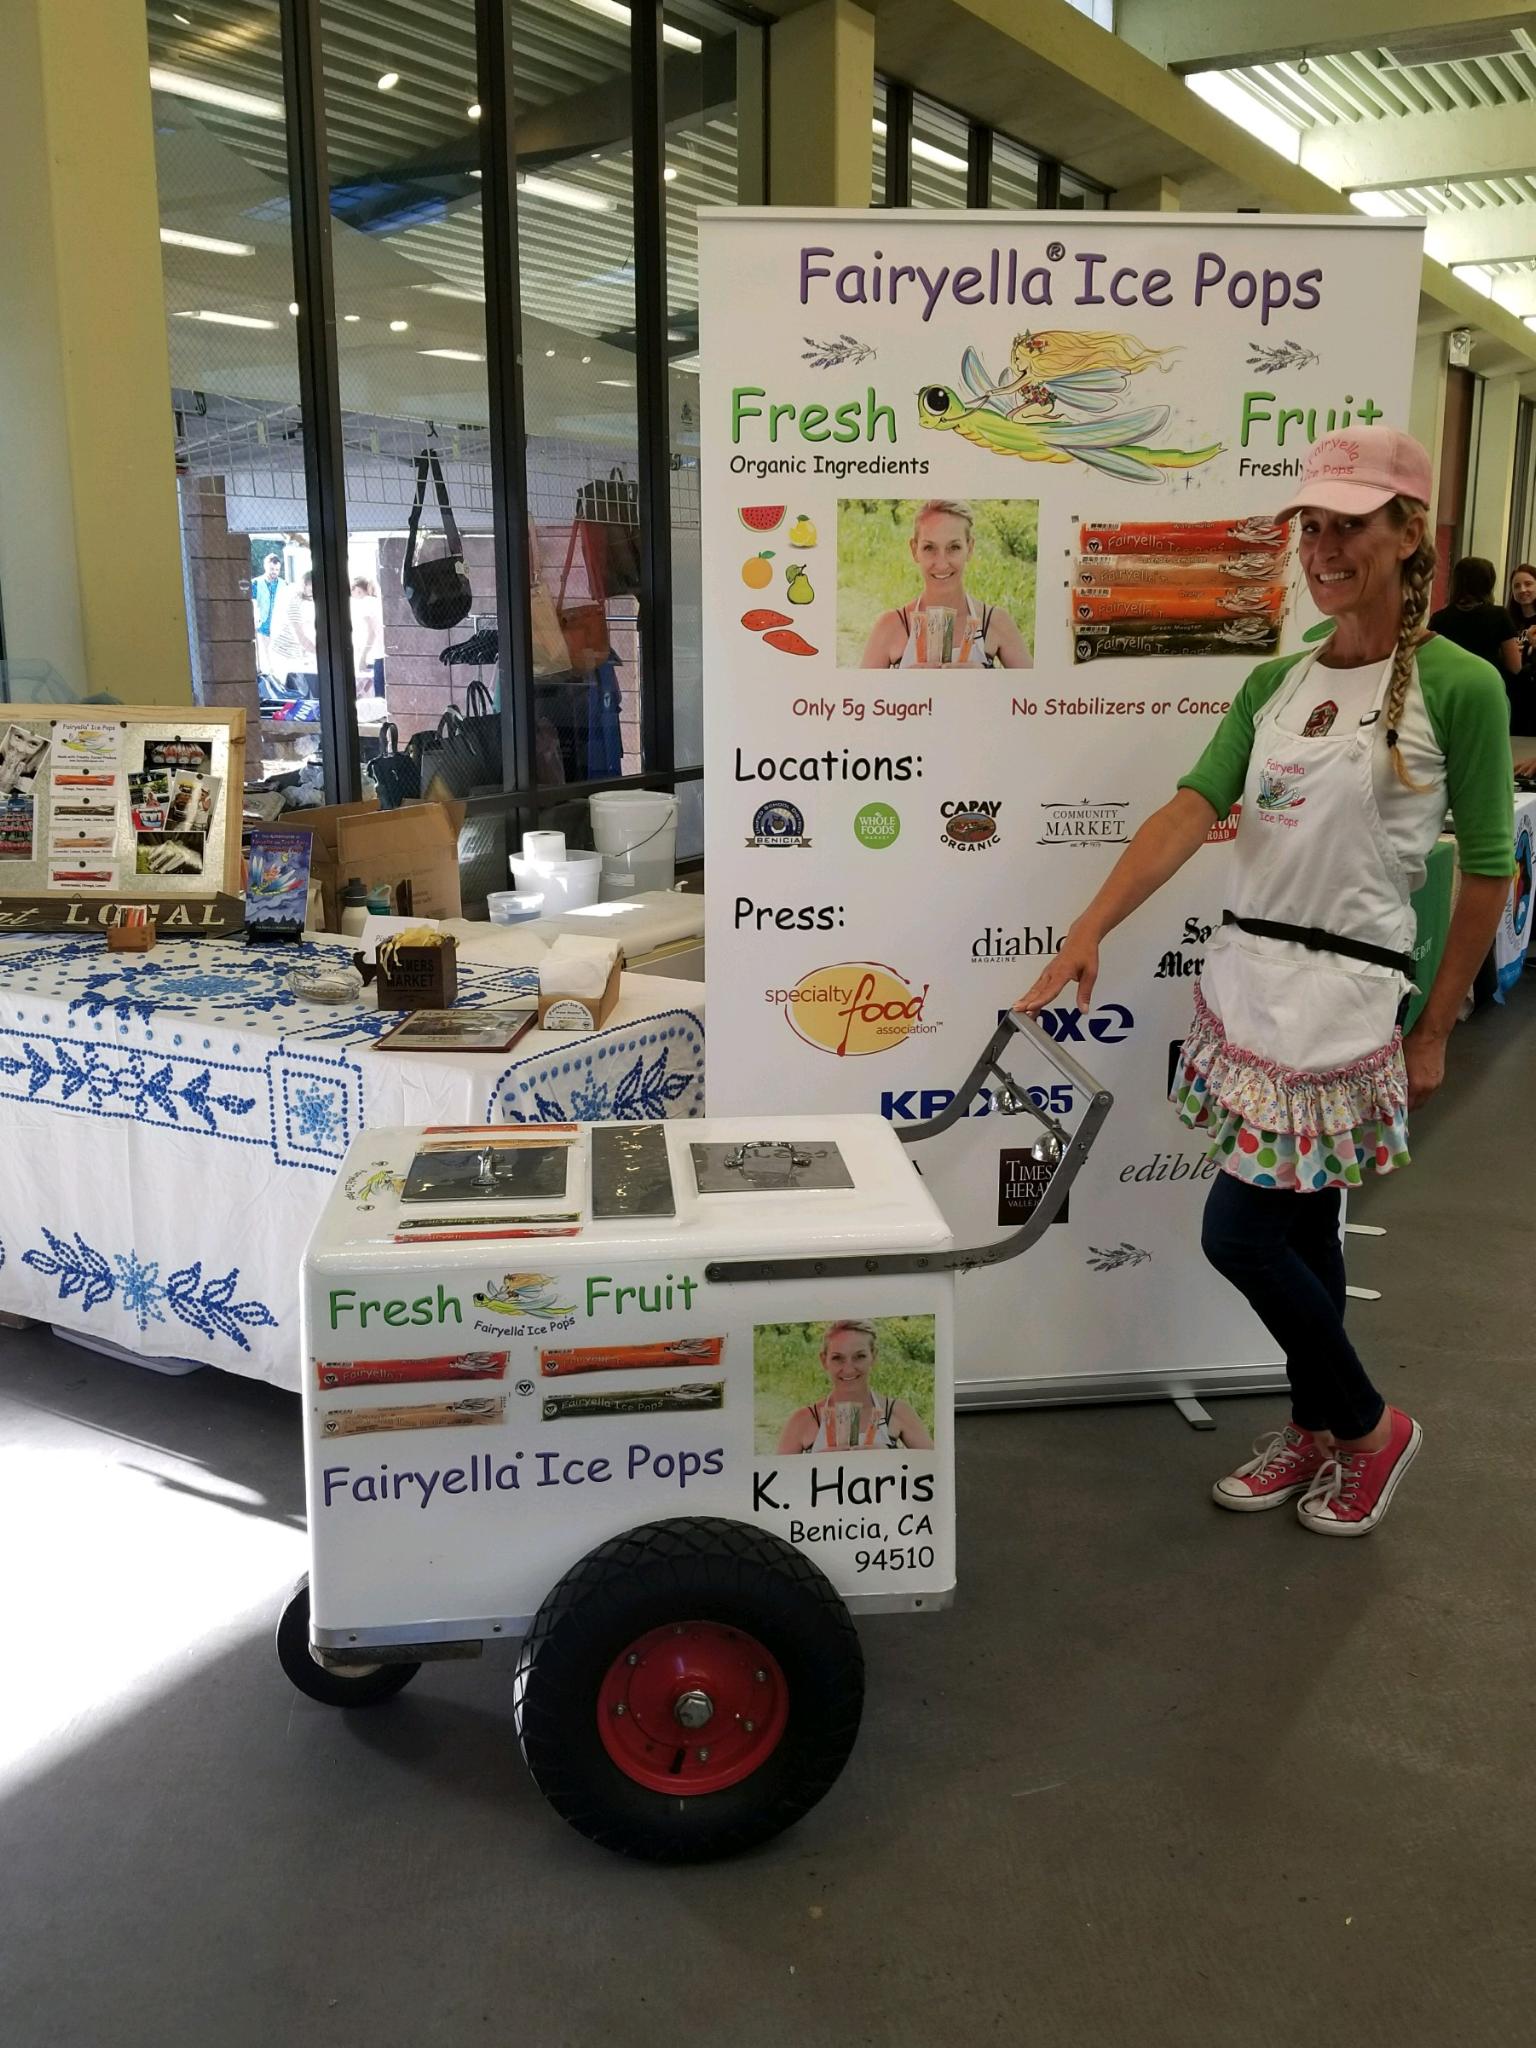 Fairyella Ice Pops event and tradeshow signs